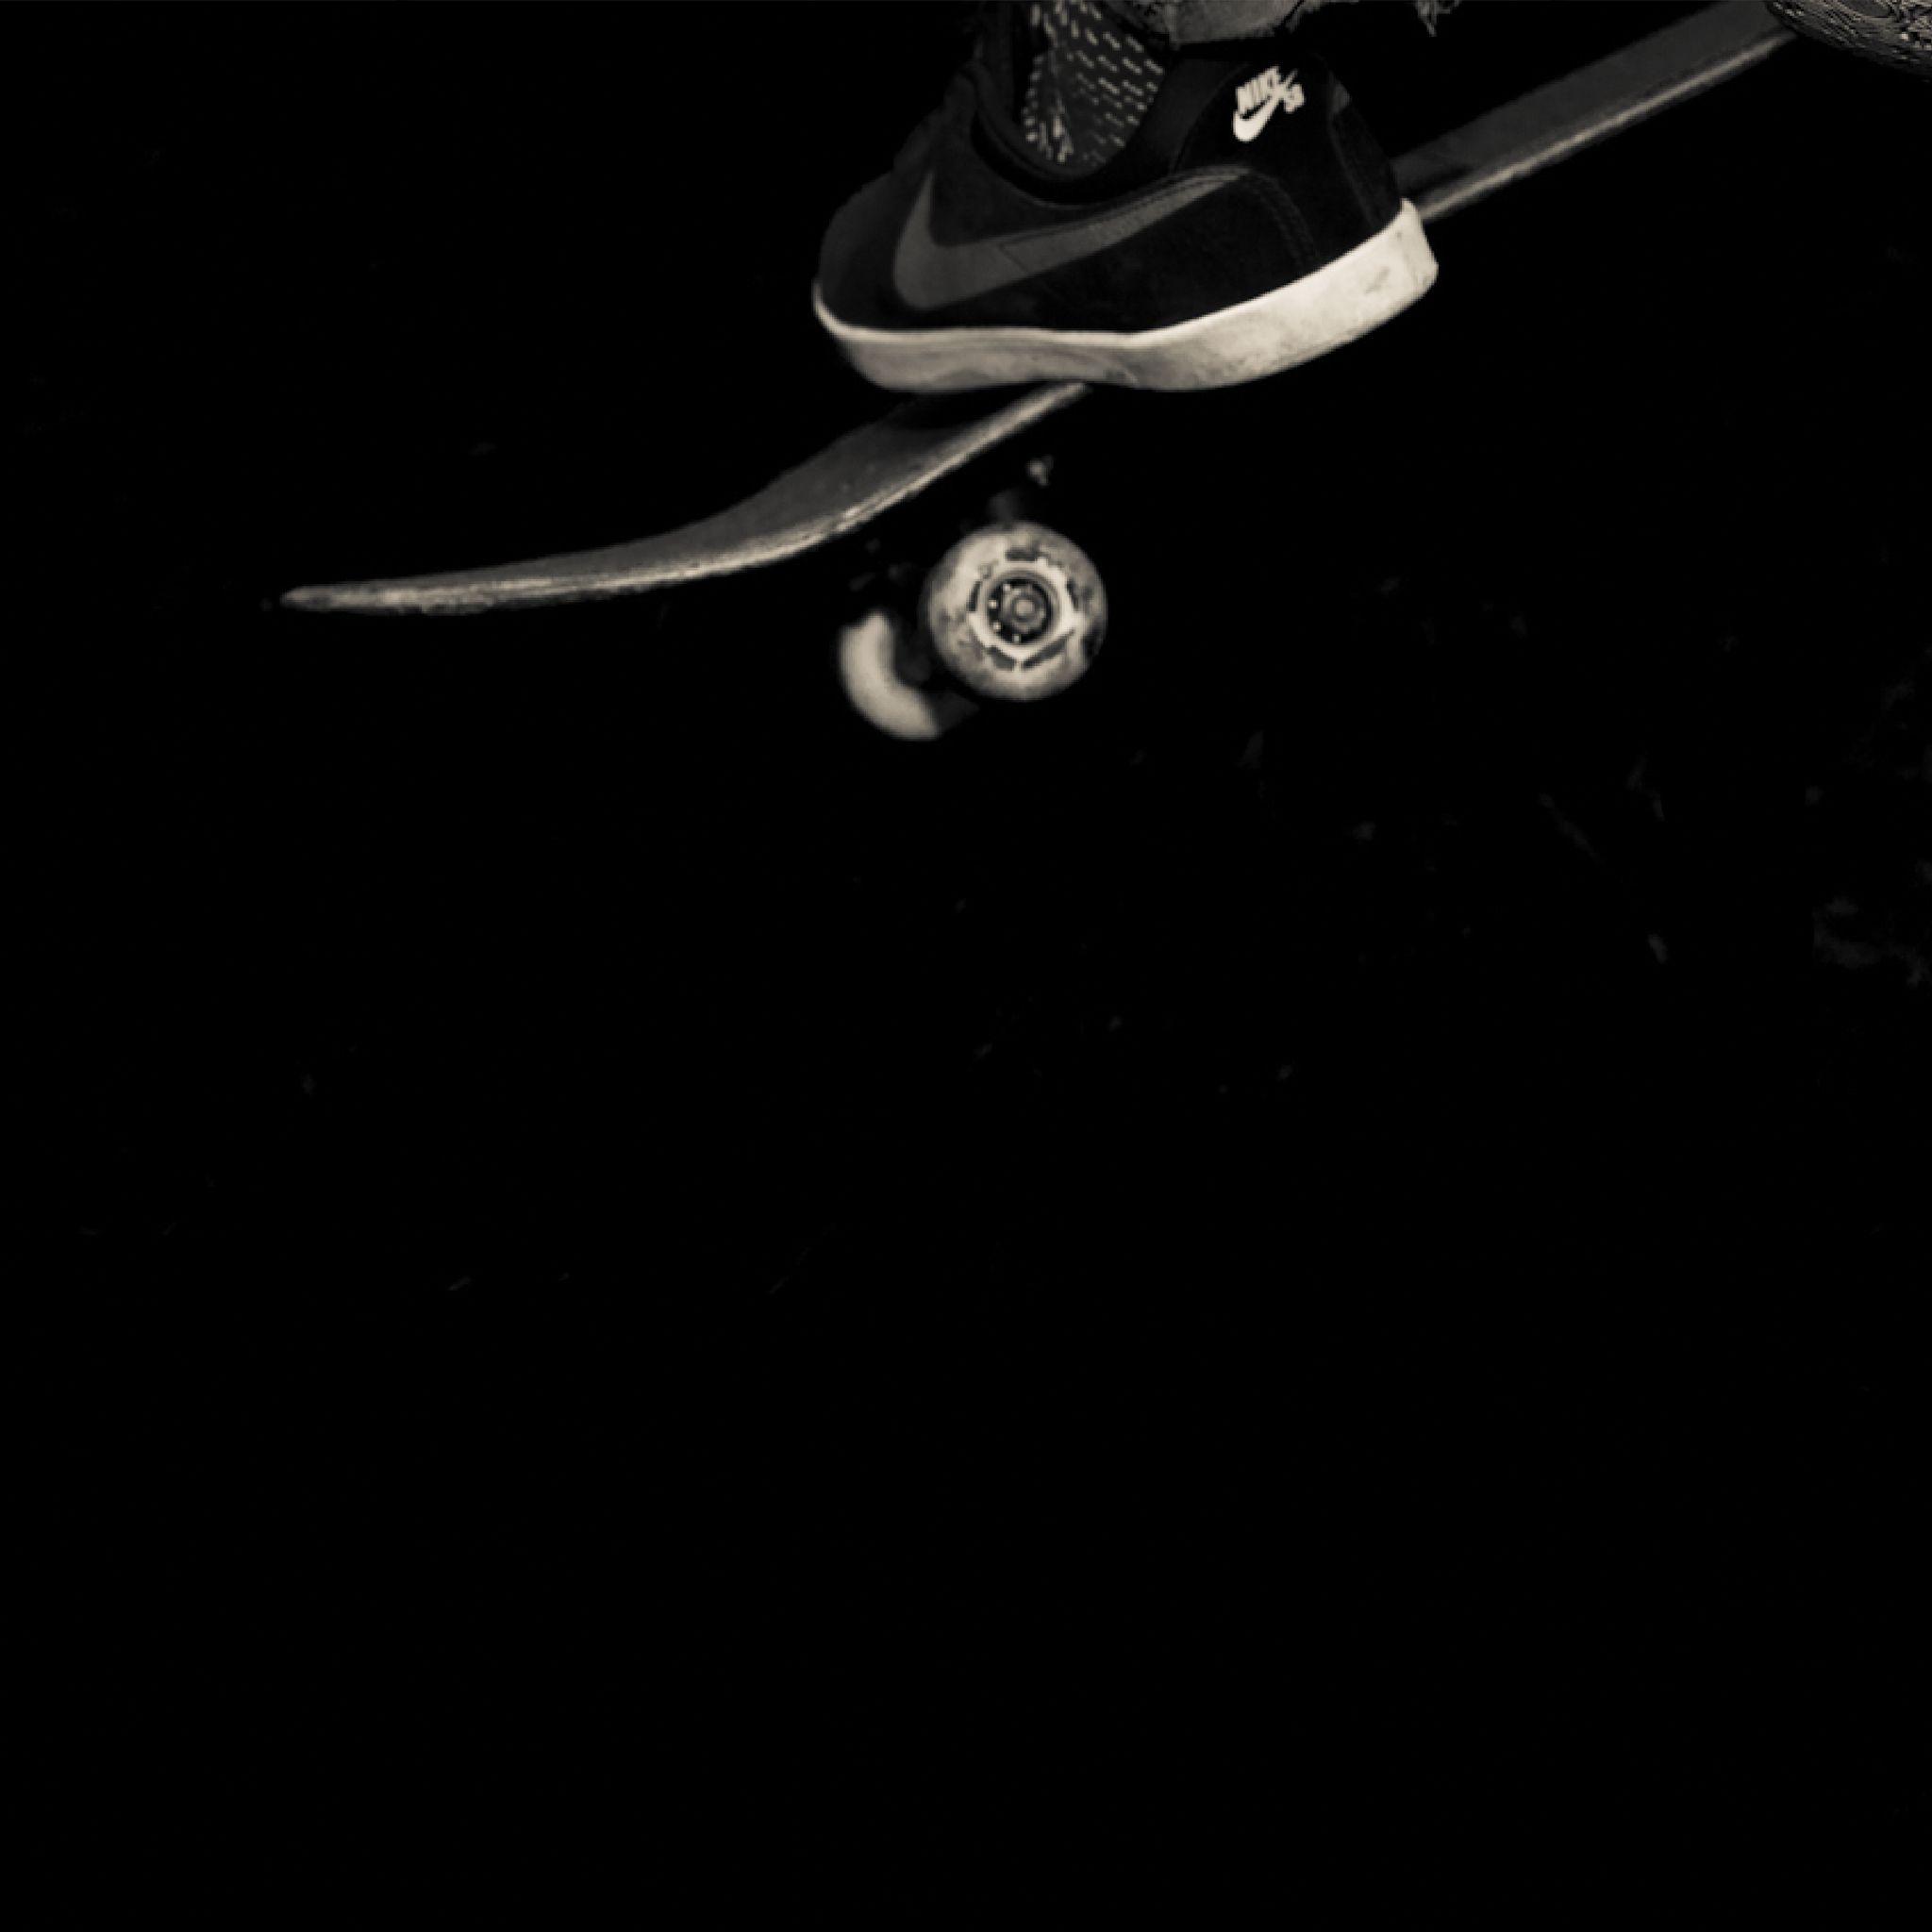 Skateboard iPhone Wallpaper Widescreen On HD Image Of Laptop